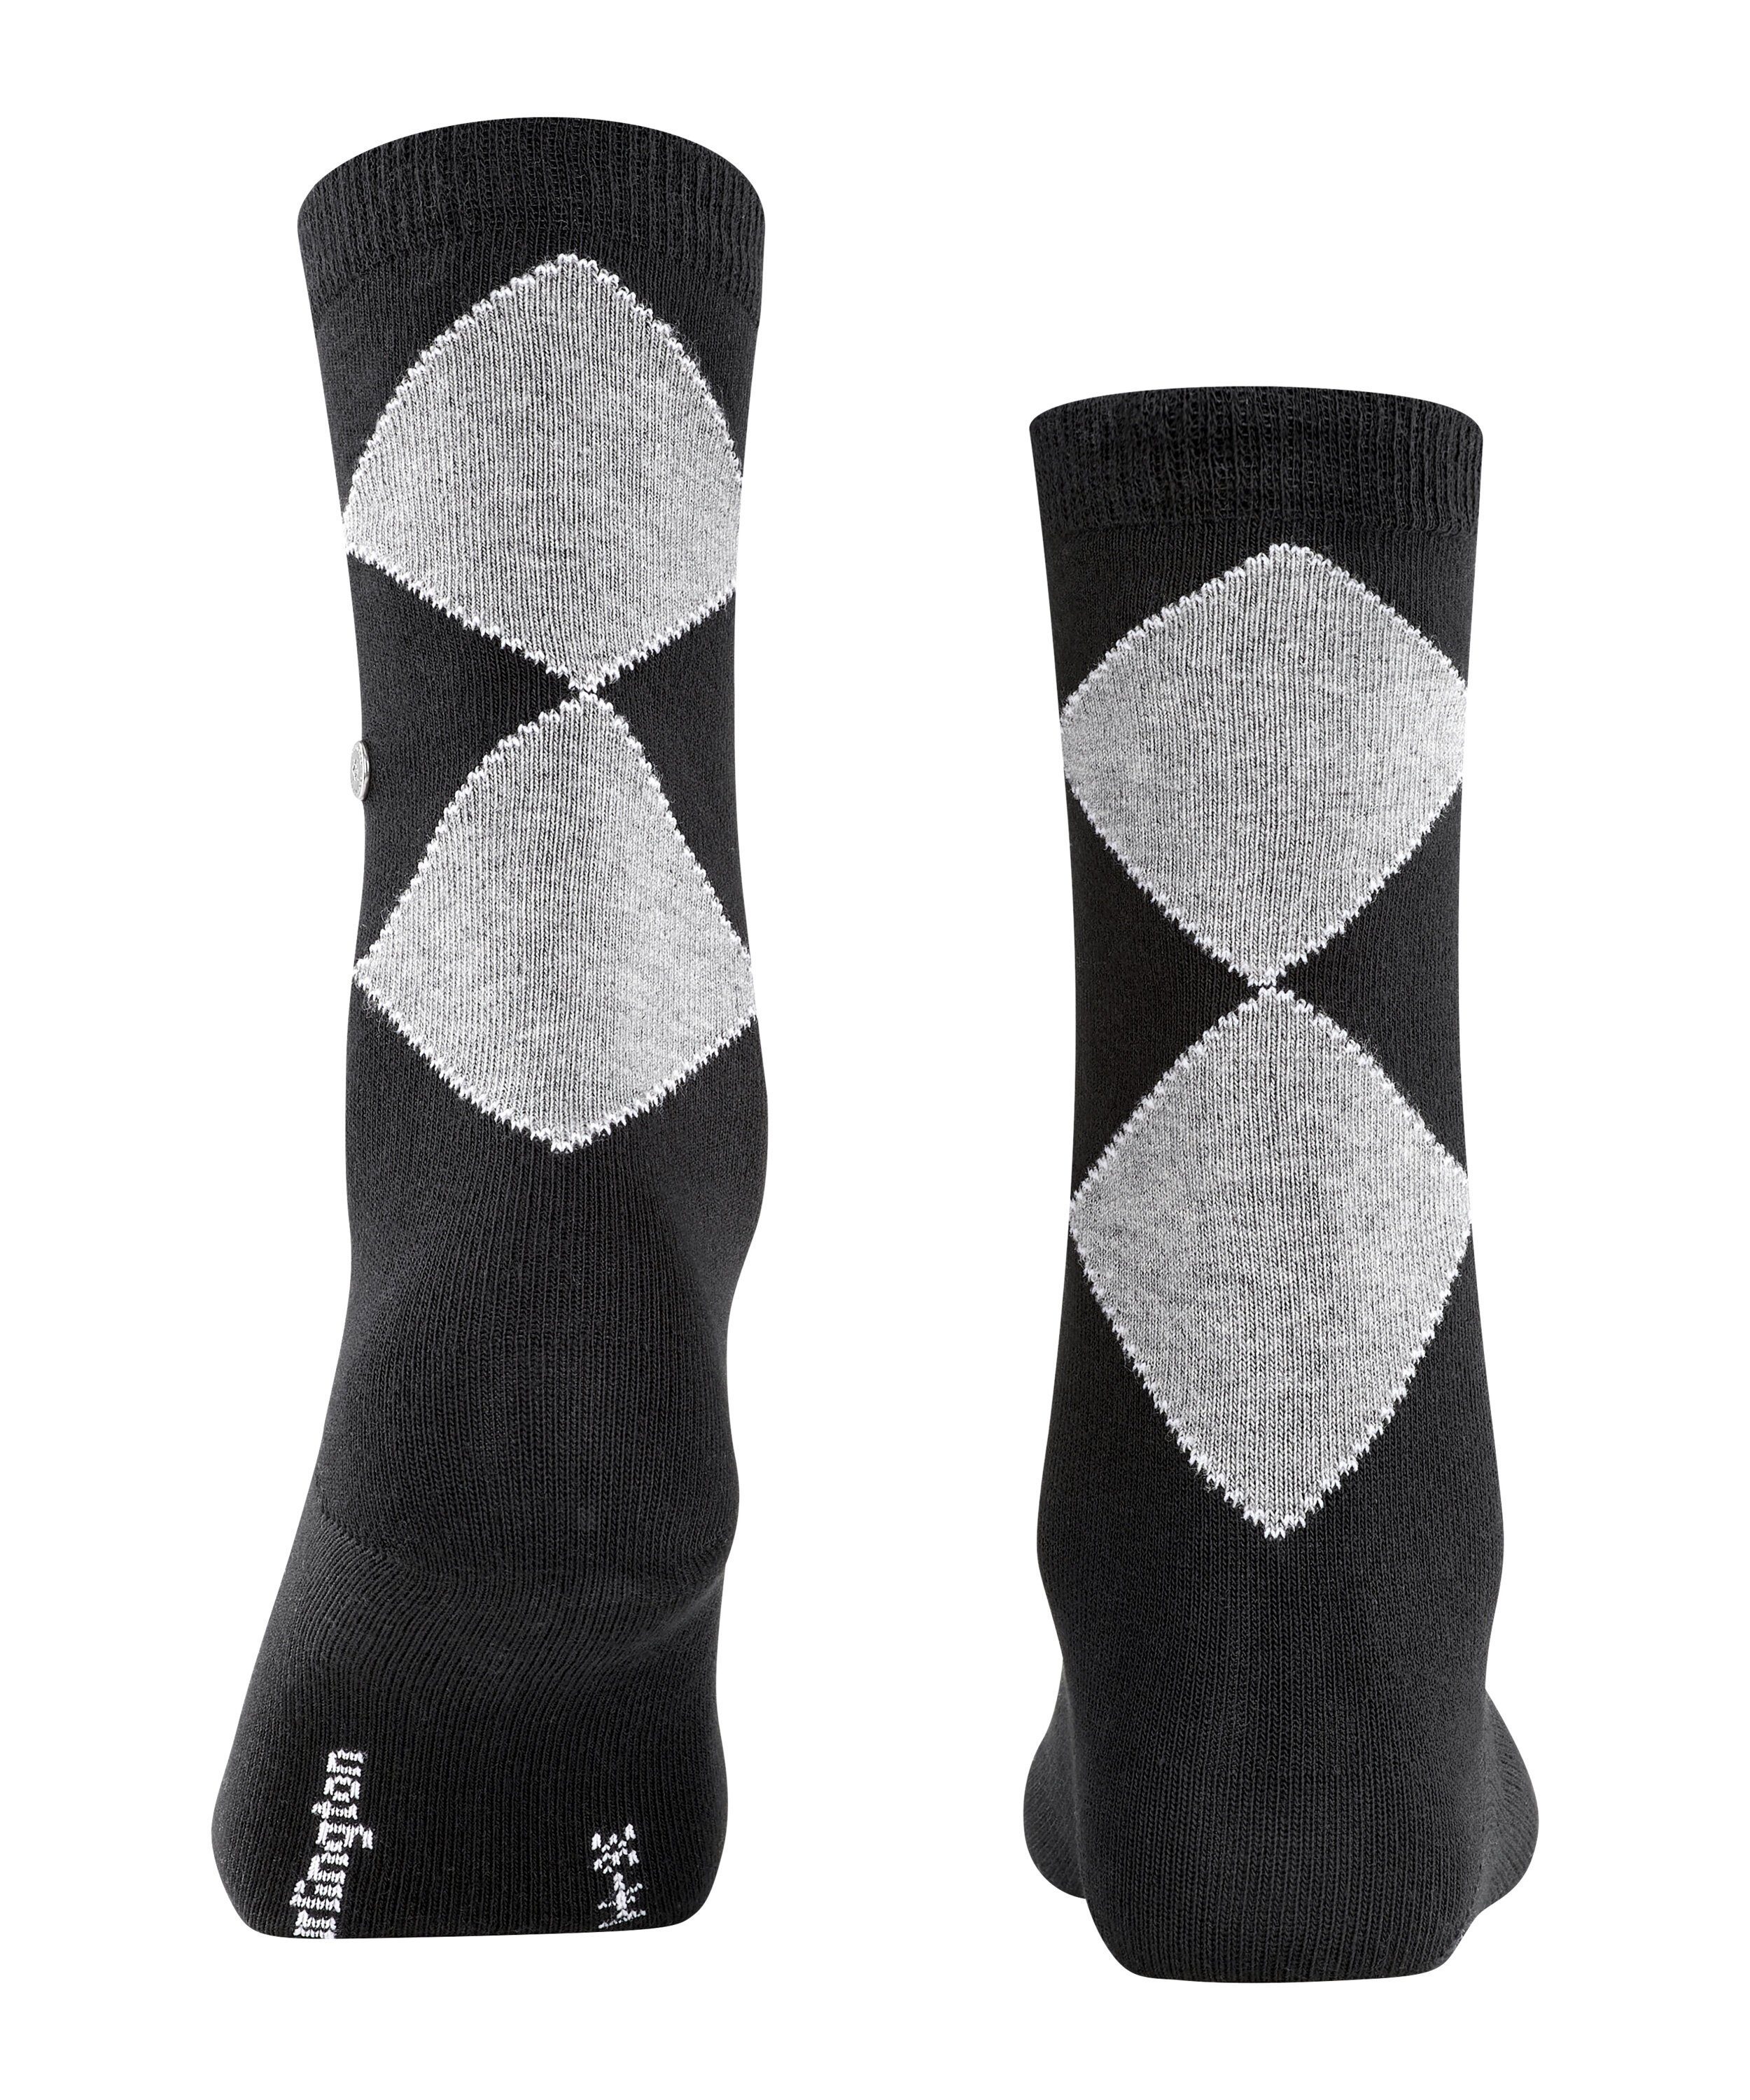 Burlington Socken black (3000) Darlington (1-Paar)